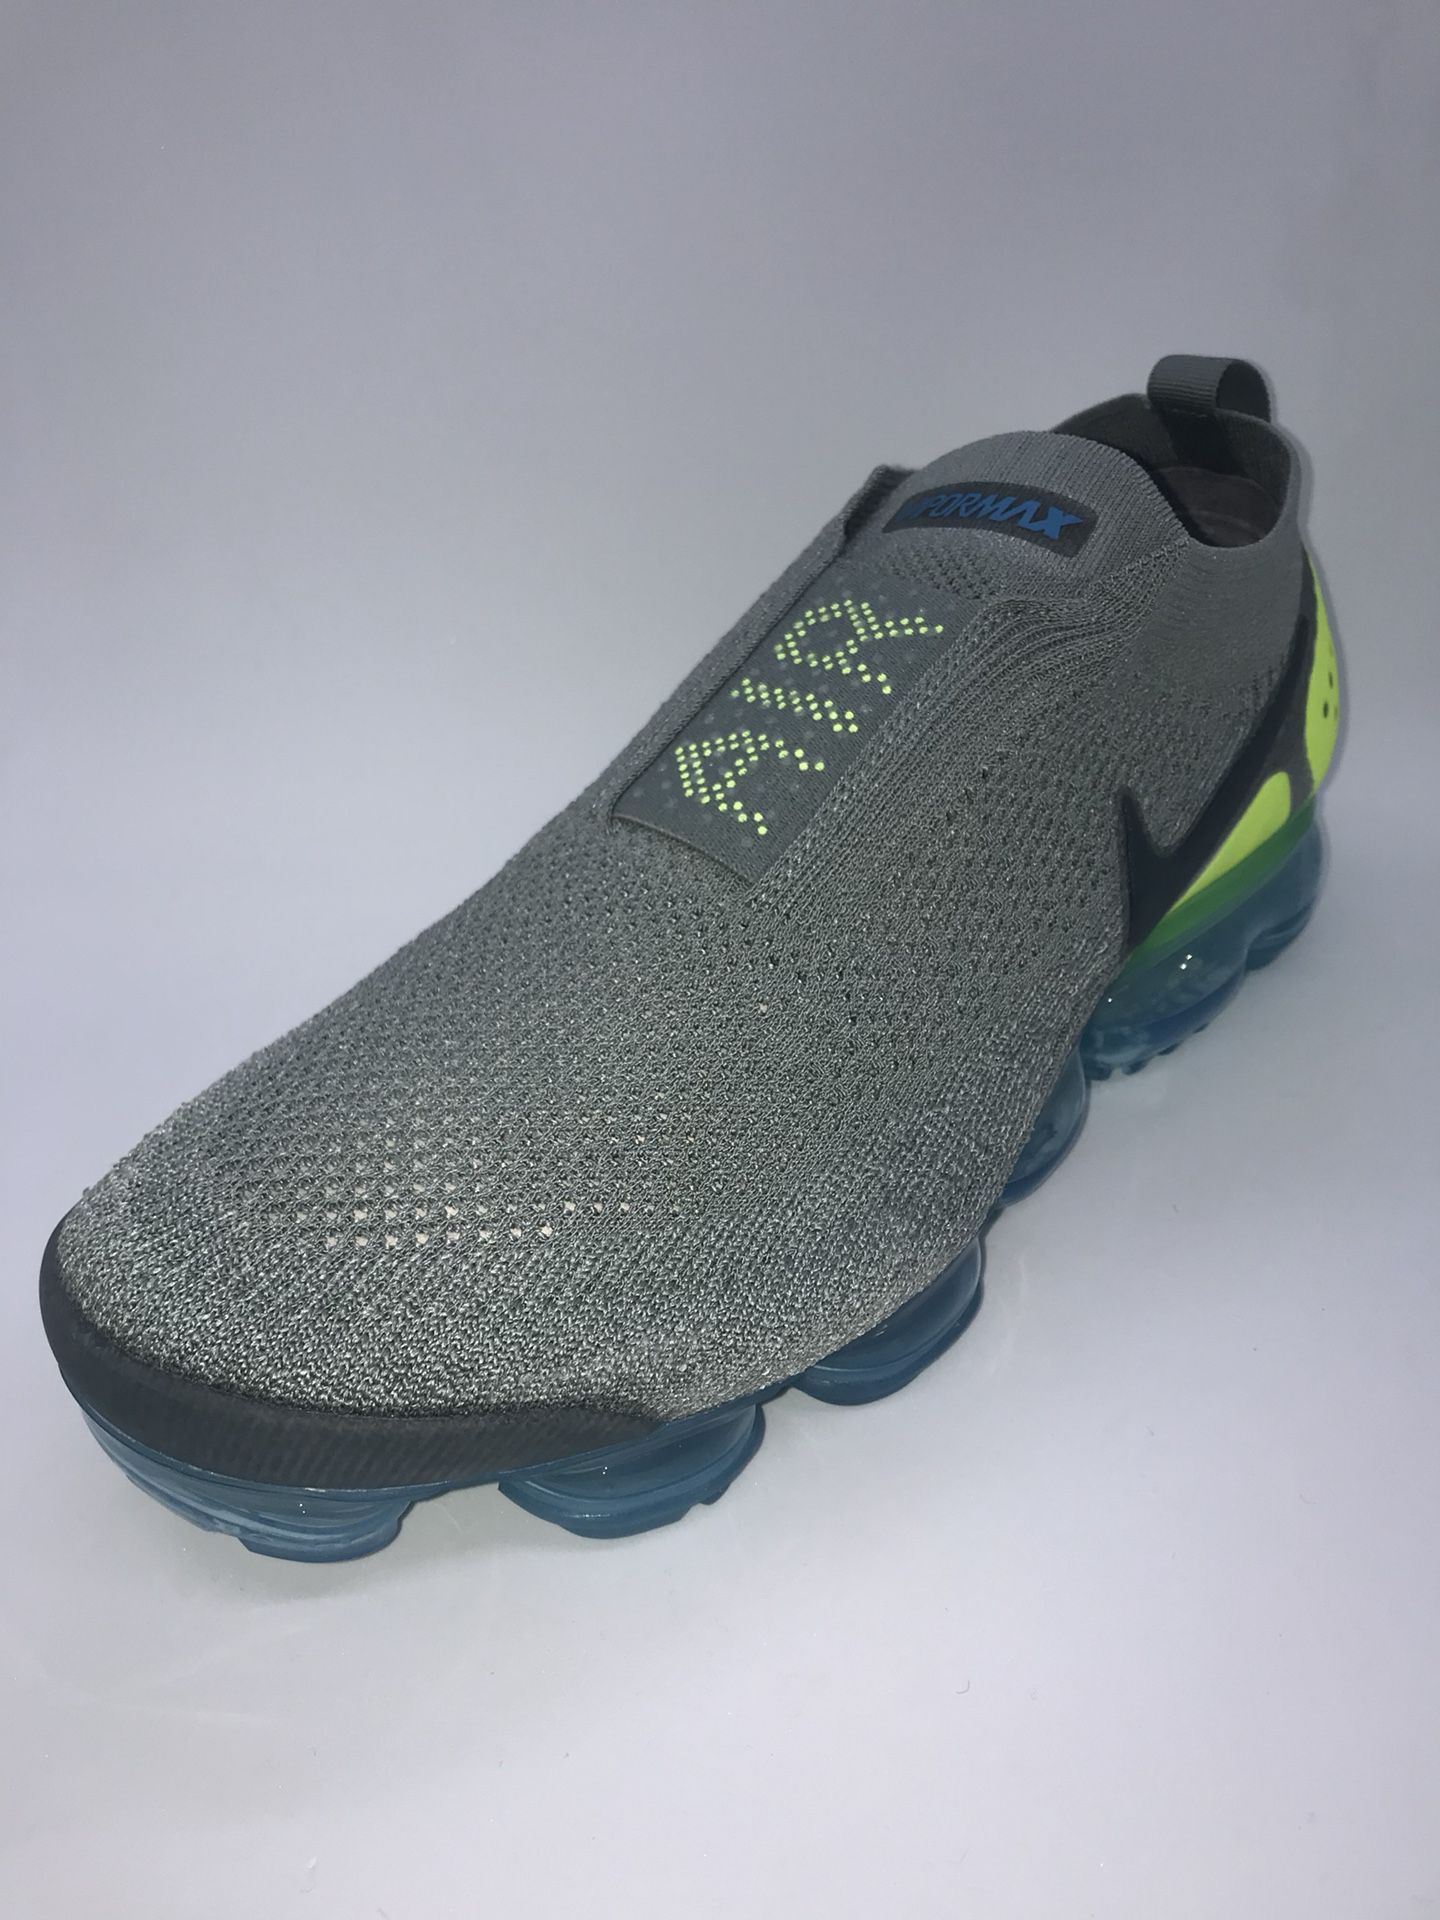 Nike Air Vapormax Flyknit MOC 2 Volt Turquoise Running Shoes AH7006-300 sz 13